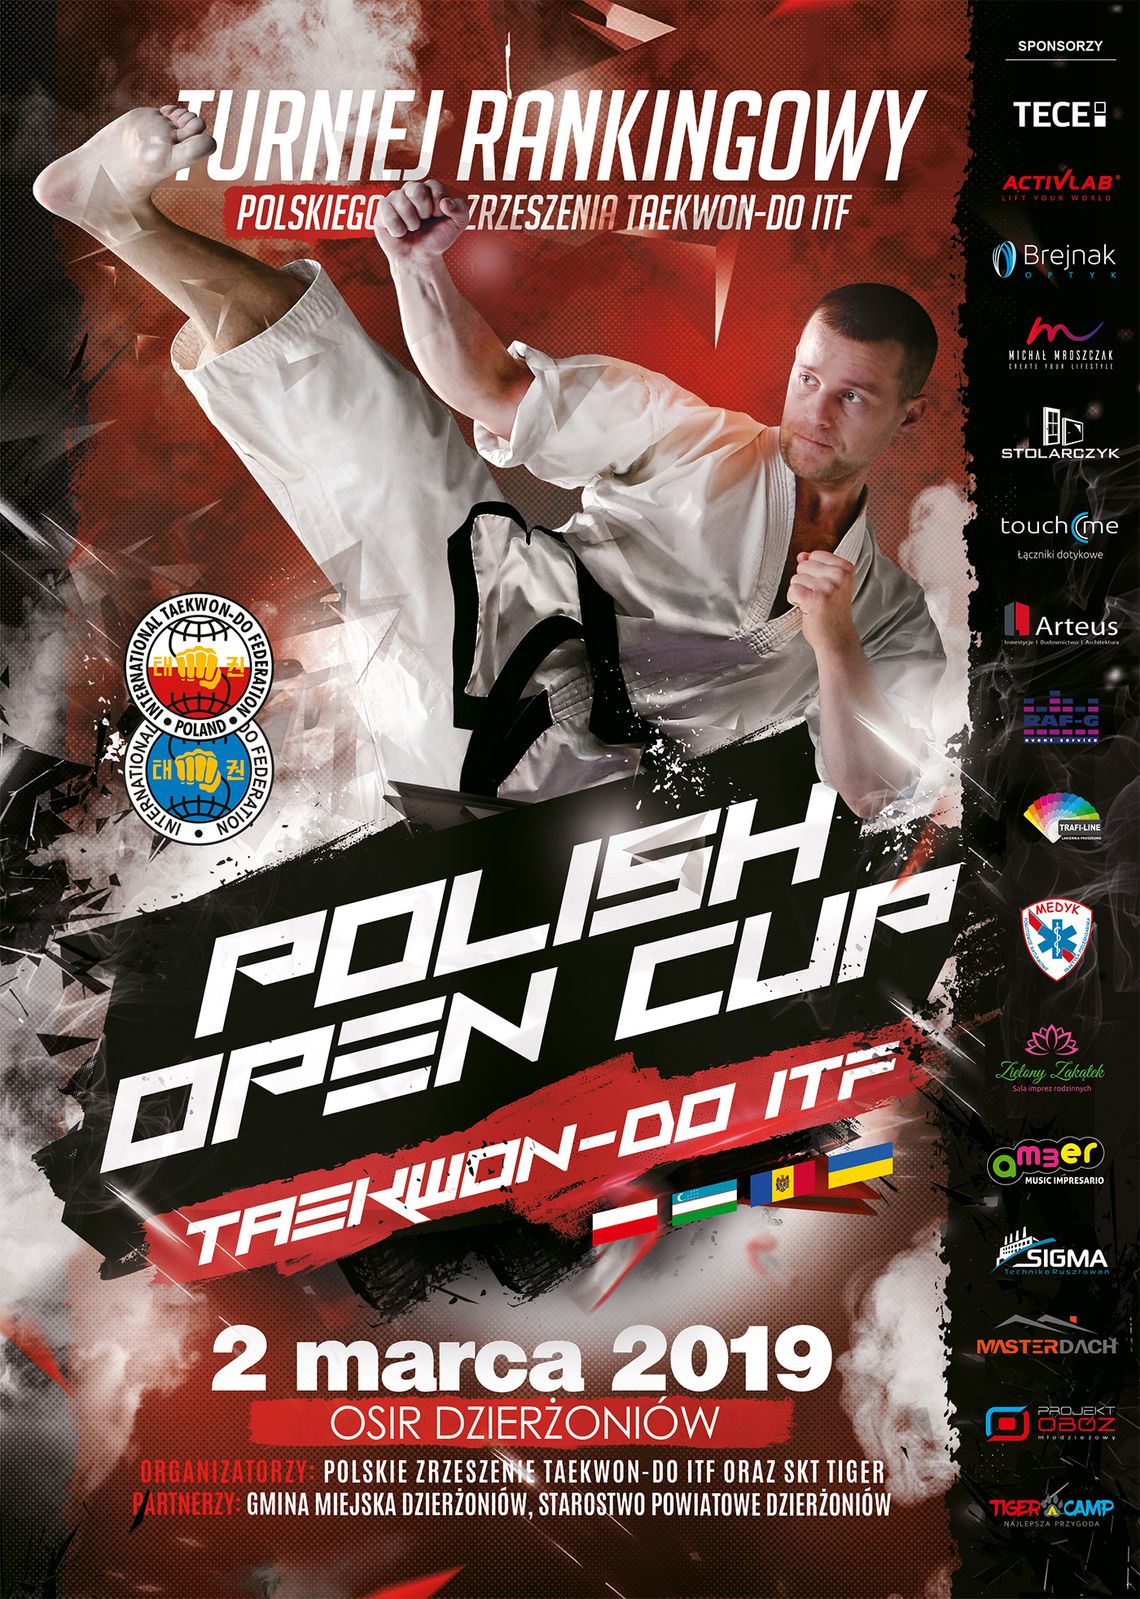 PRZED NAMI TAEKWON-DO POLISH OPEN CUP 2019